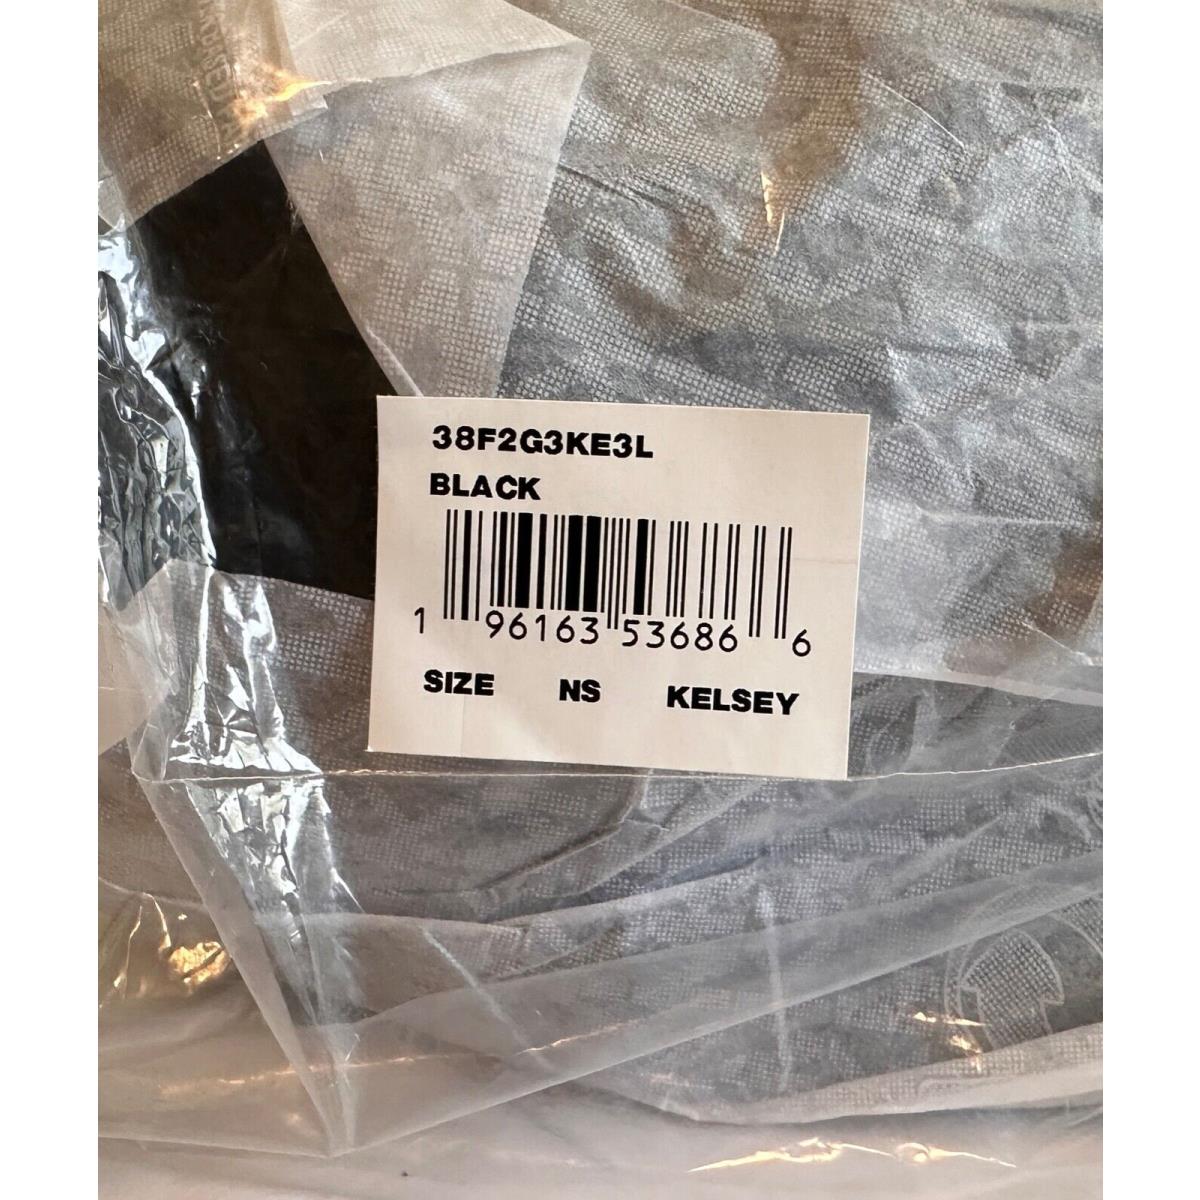 Michael Kors  bag  Kelsey - Multicolor Handle/Strap, GOLD OR SILVER Hardware, Multicolor Exterior 26